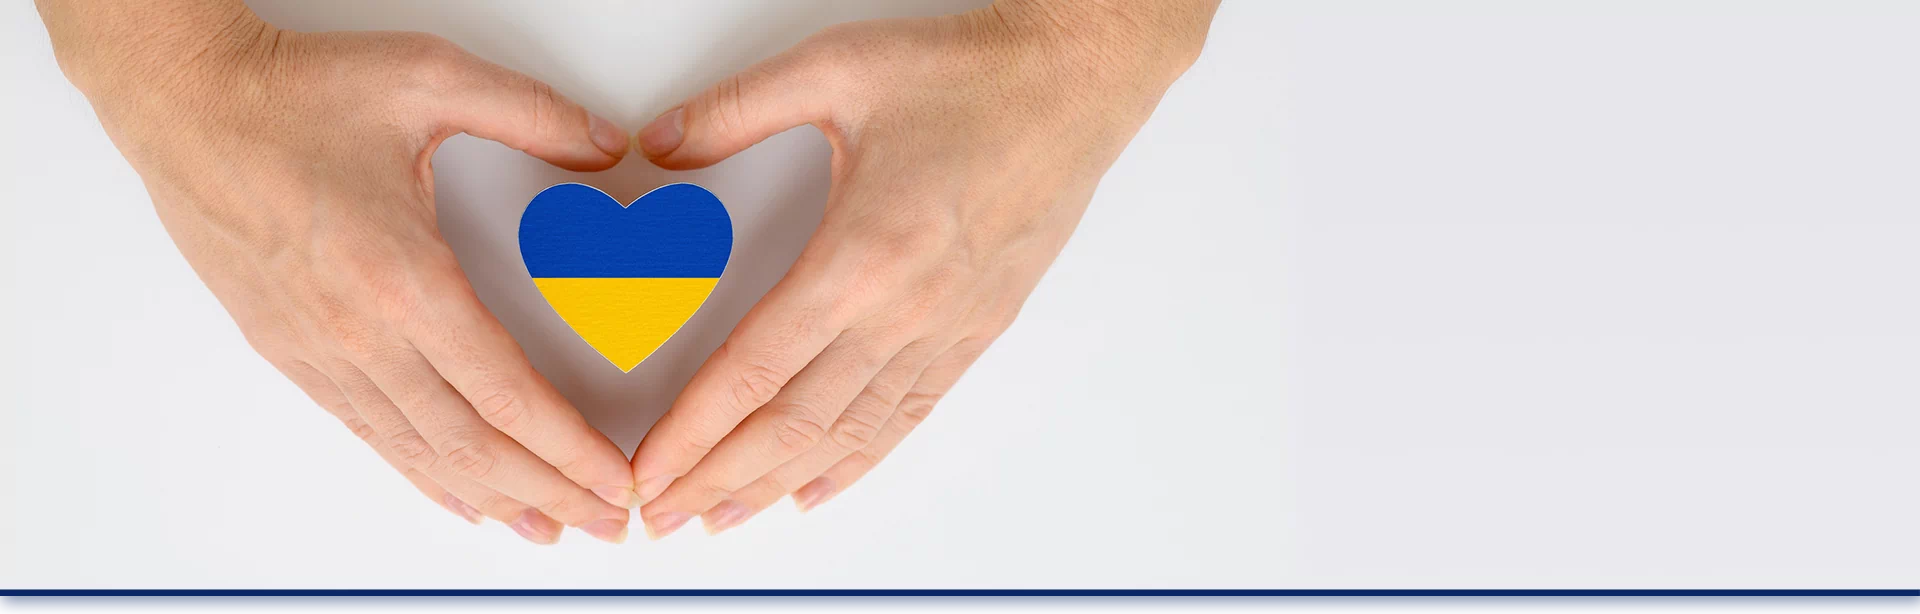 Flaga Ukrainy w kształcie serca